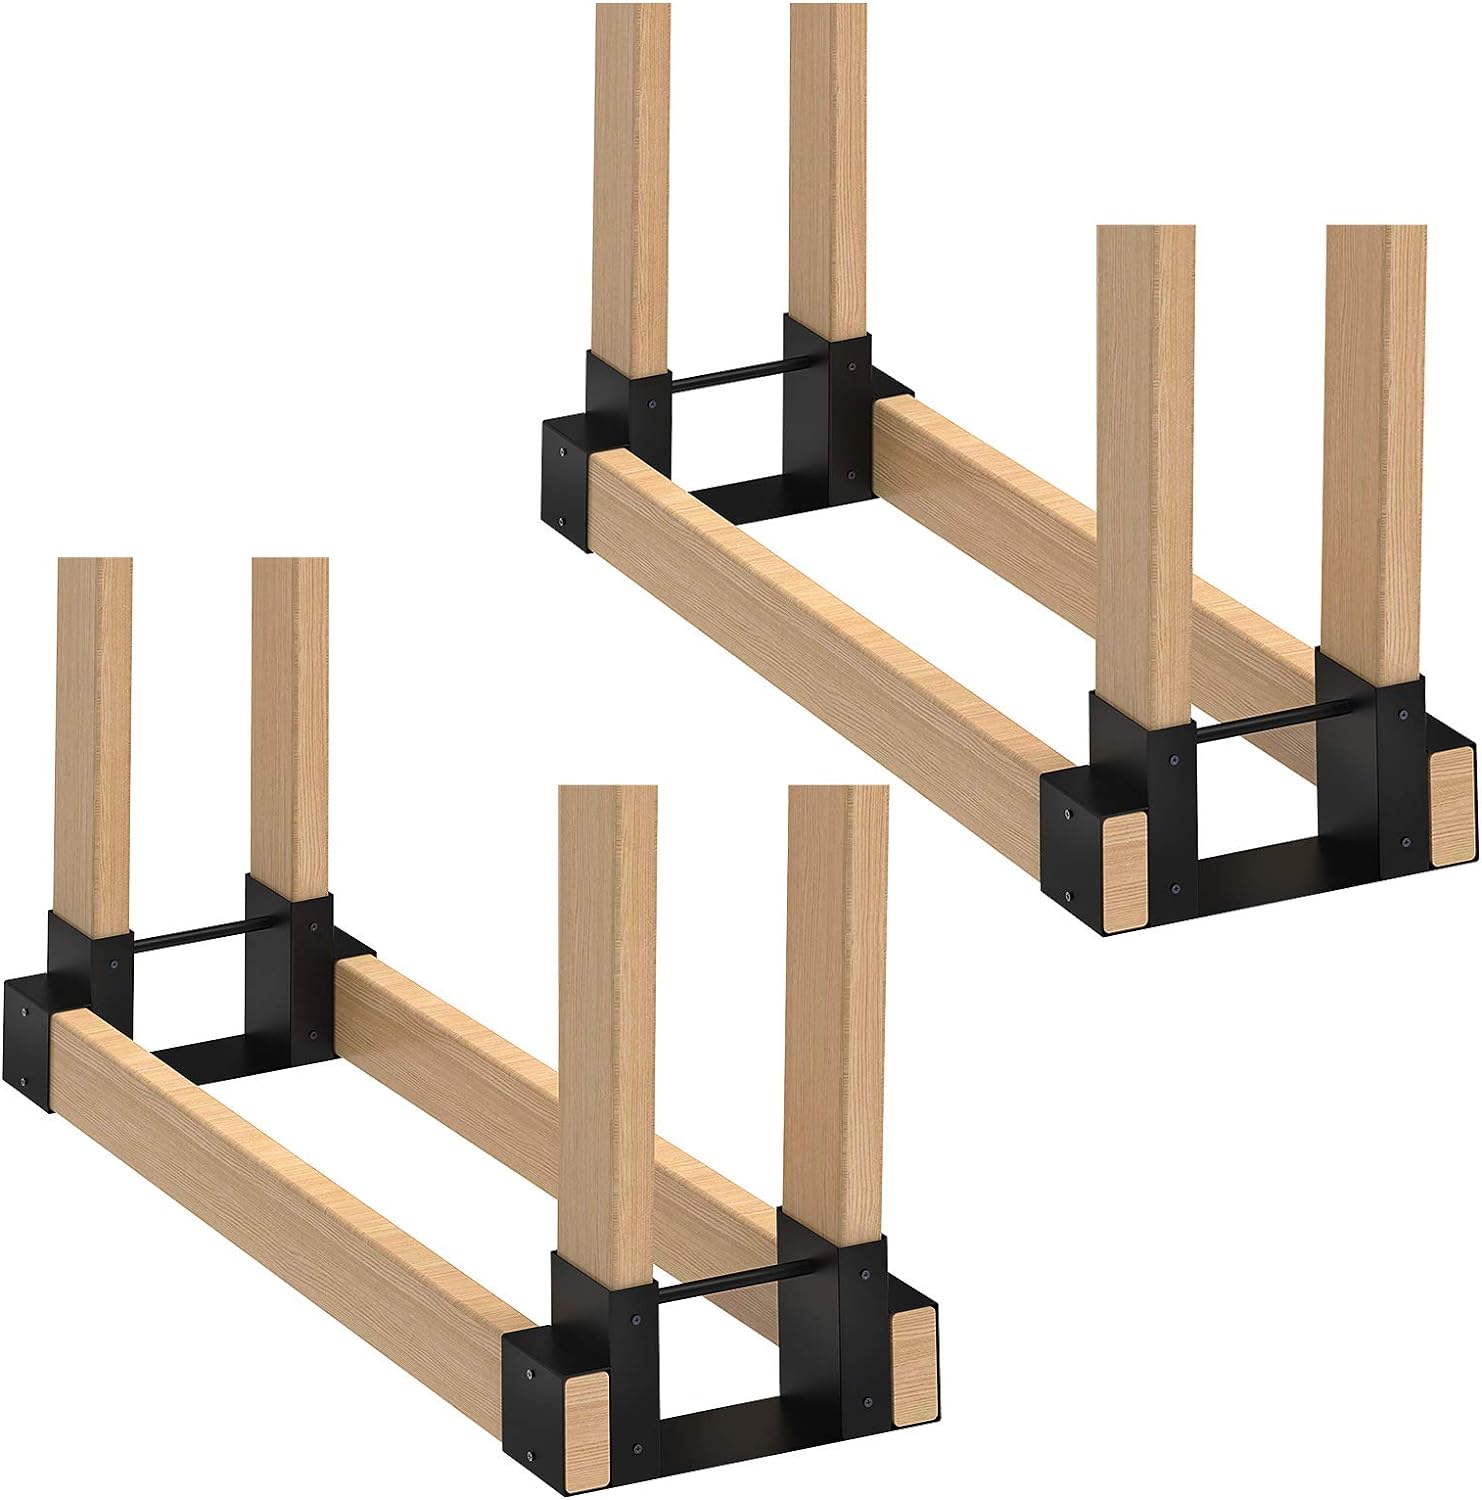 Outdoor Firewood Log Rack Bracket Kit Metal Fire Adjustable Wood Storage Holder